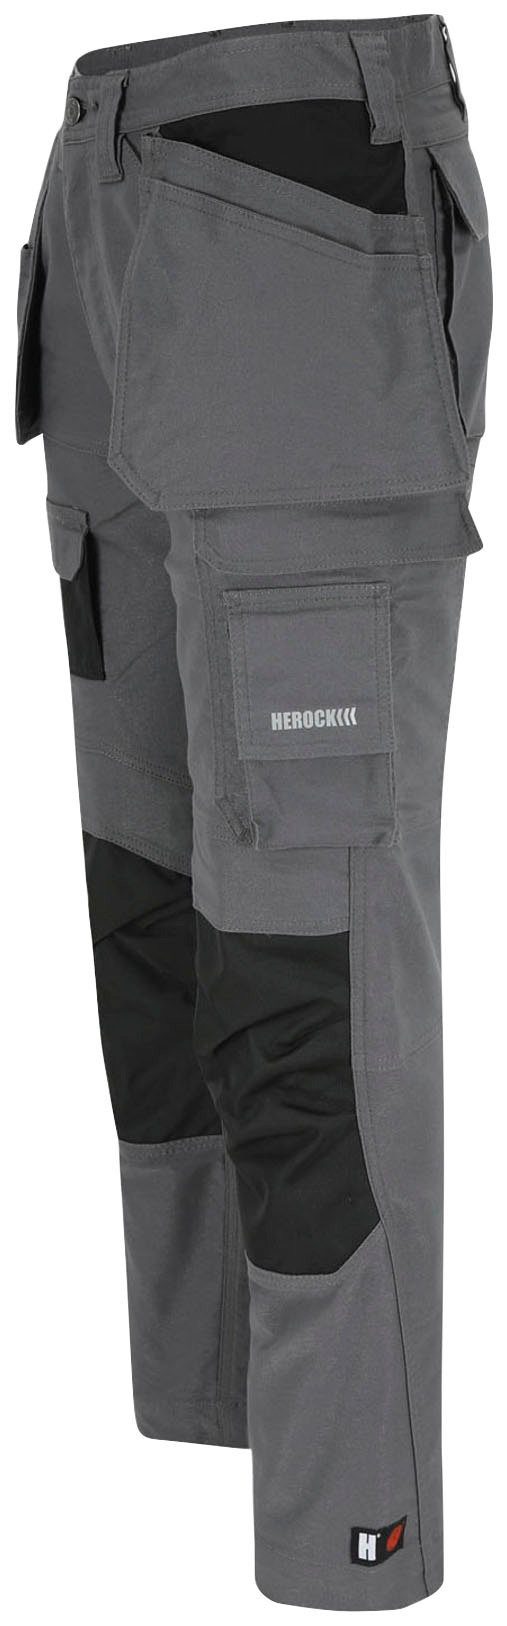 Herock Arbeitshose HEROCLES Technologie) Multi-pocket, Stretch, feste Nageltaschen grau (Coolmax® sehr robust